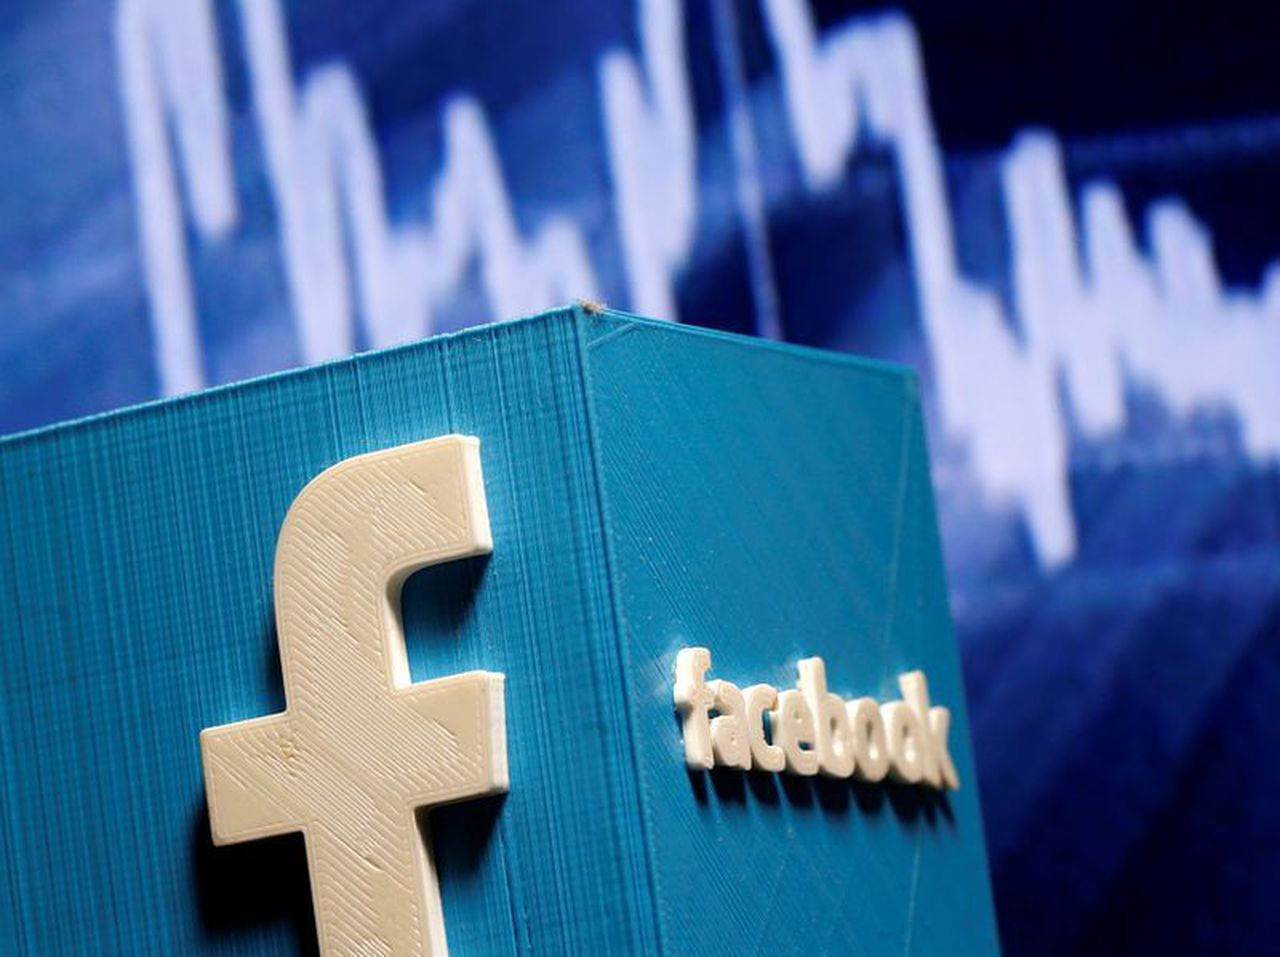 Facebook has been facing large amounts of international scrutiny recently, image via Yahoo